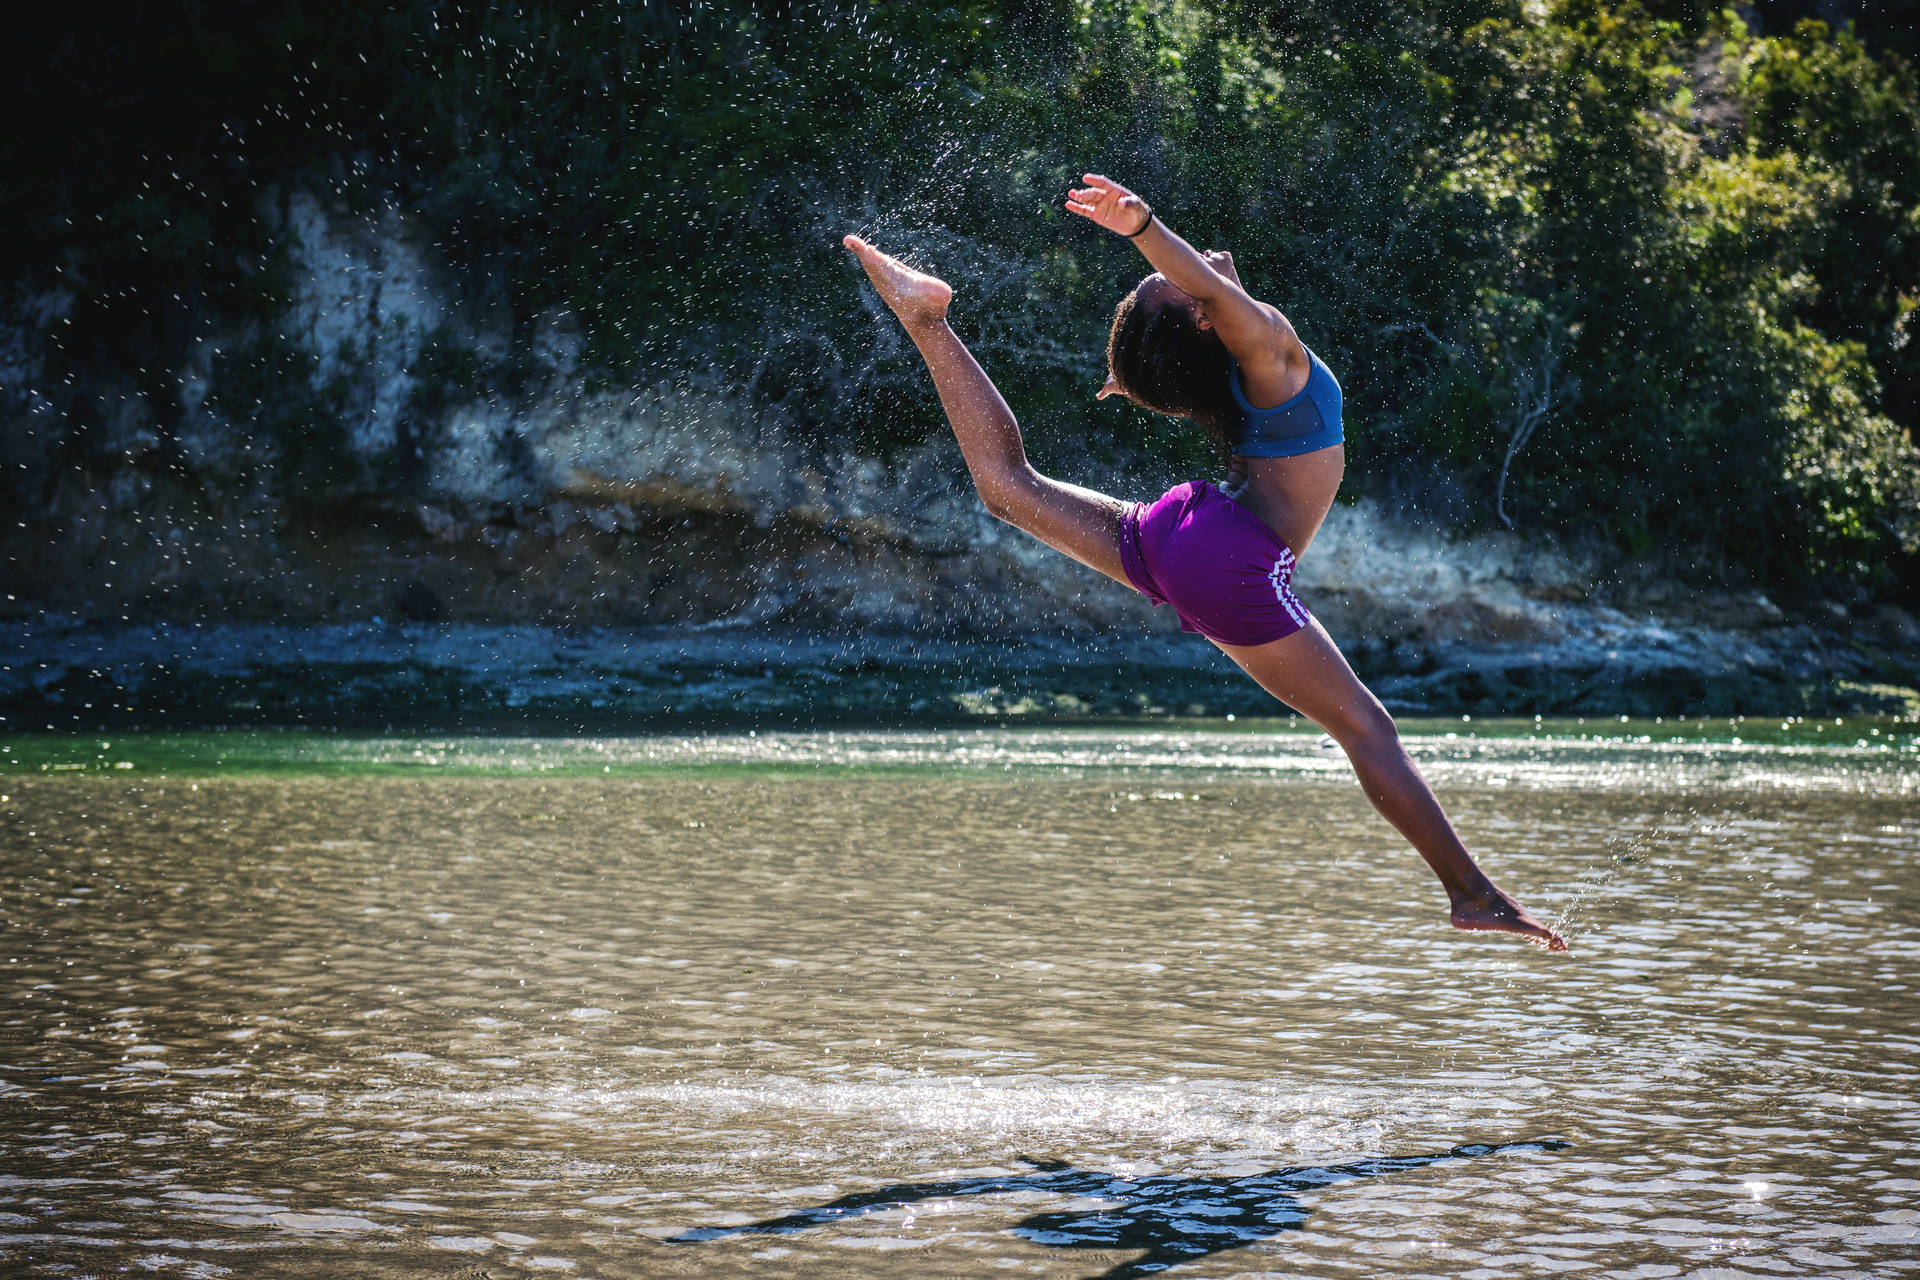 Gymnastics Jump In River